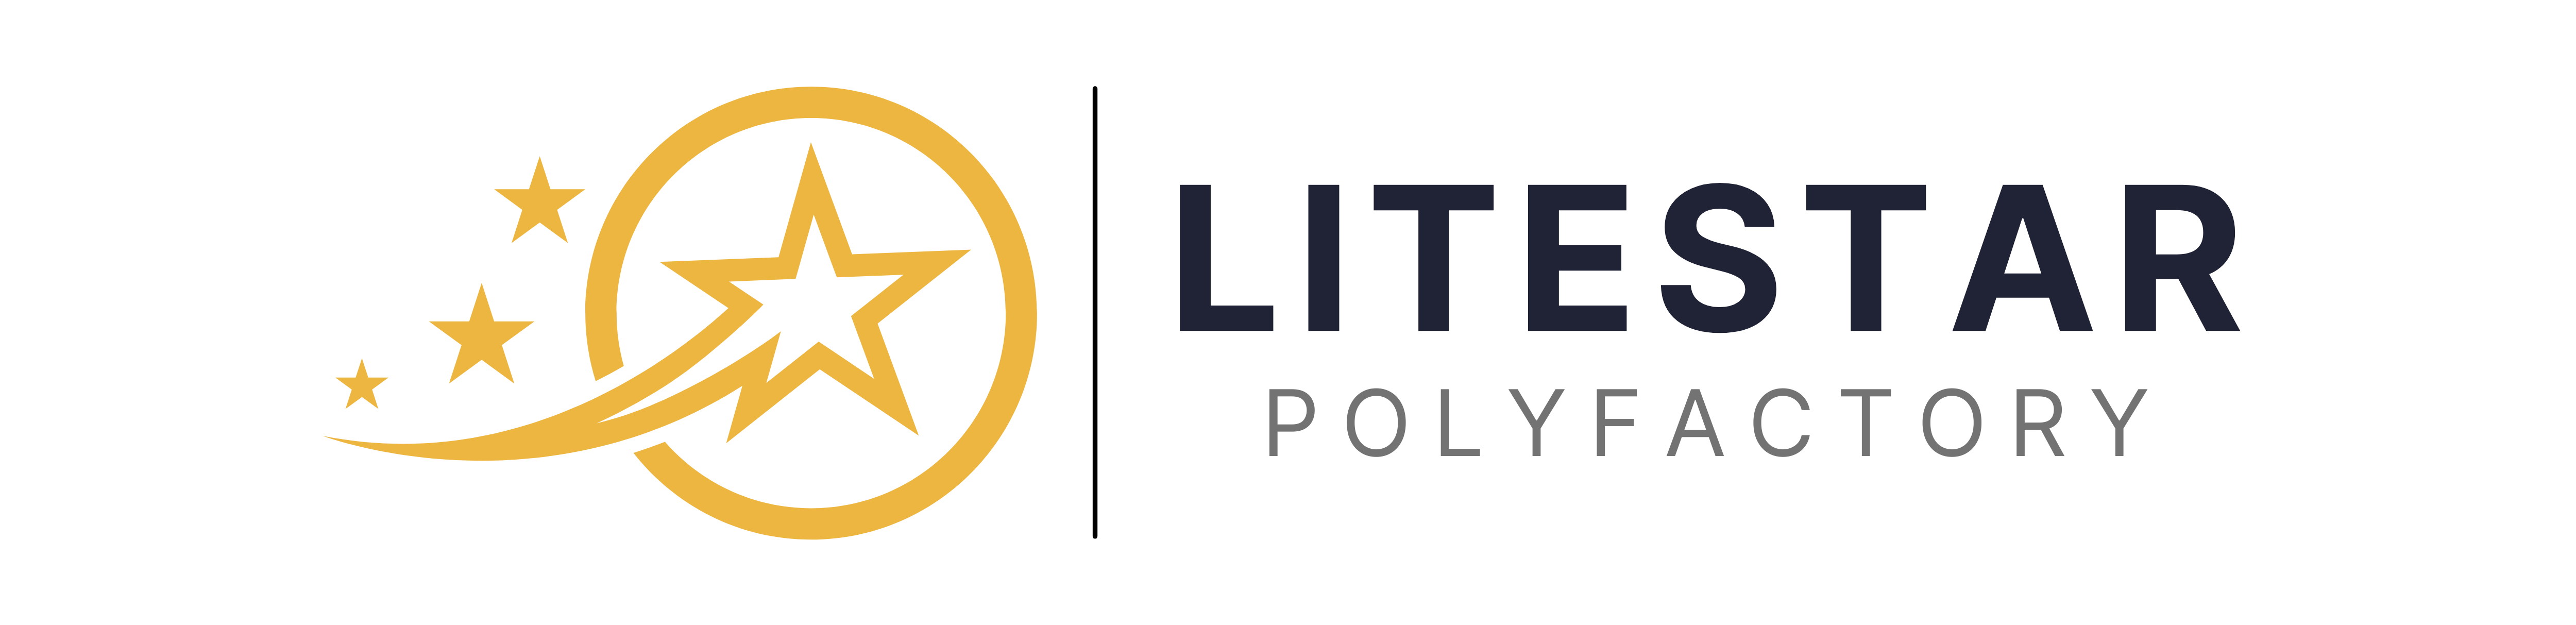 Polyfactory Logo - Light